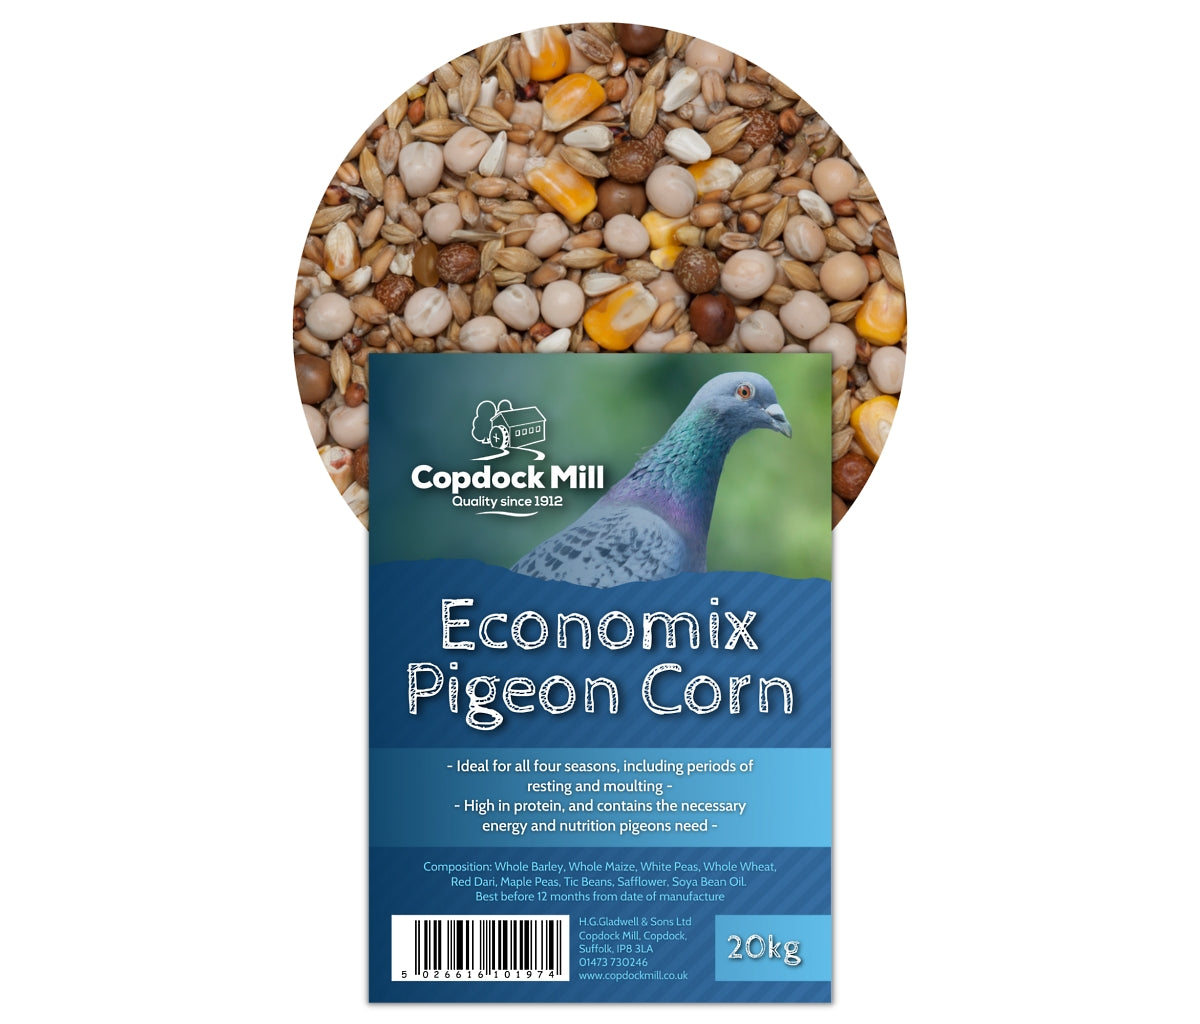 Copdock Mill - Economix Pigeon Corn - 20kg